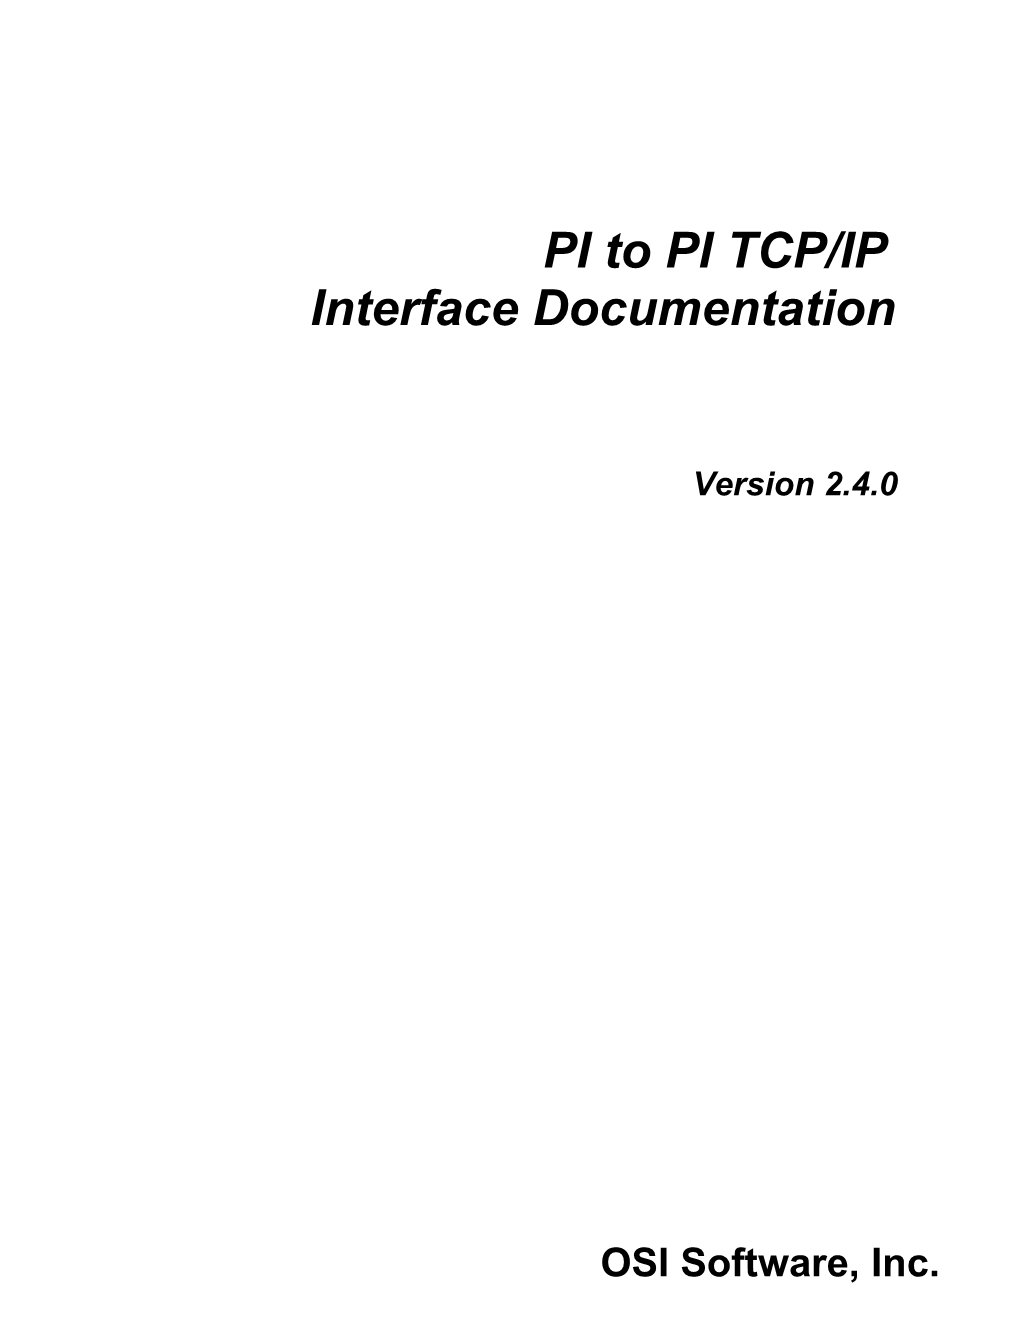 PI to PI TCP/IP Interface Documentation